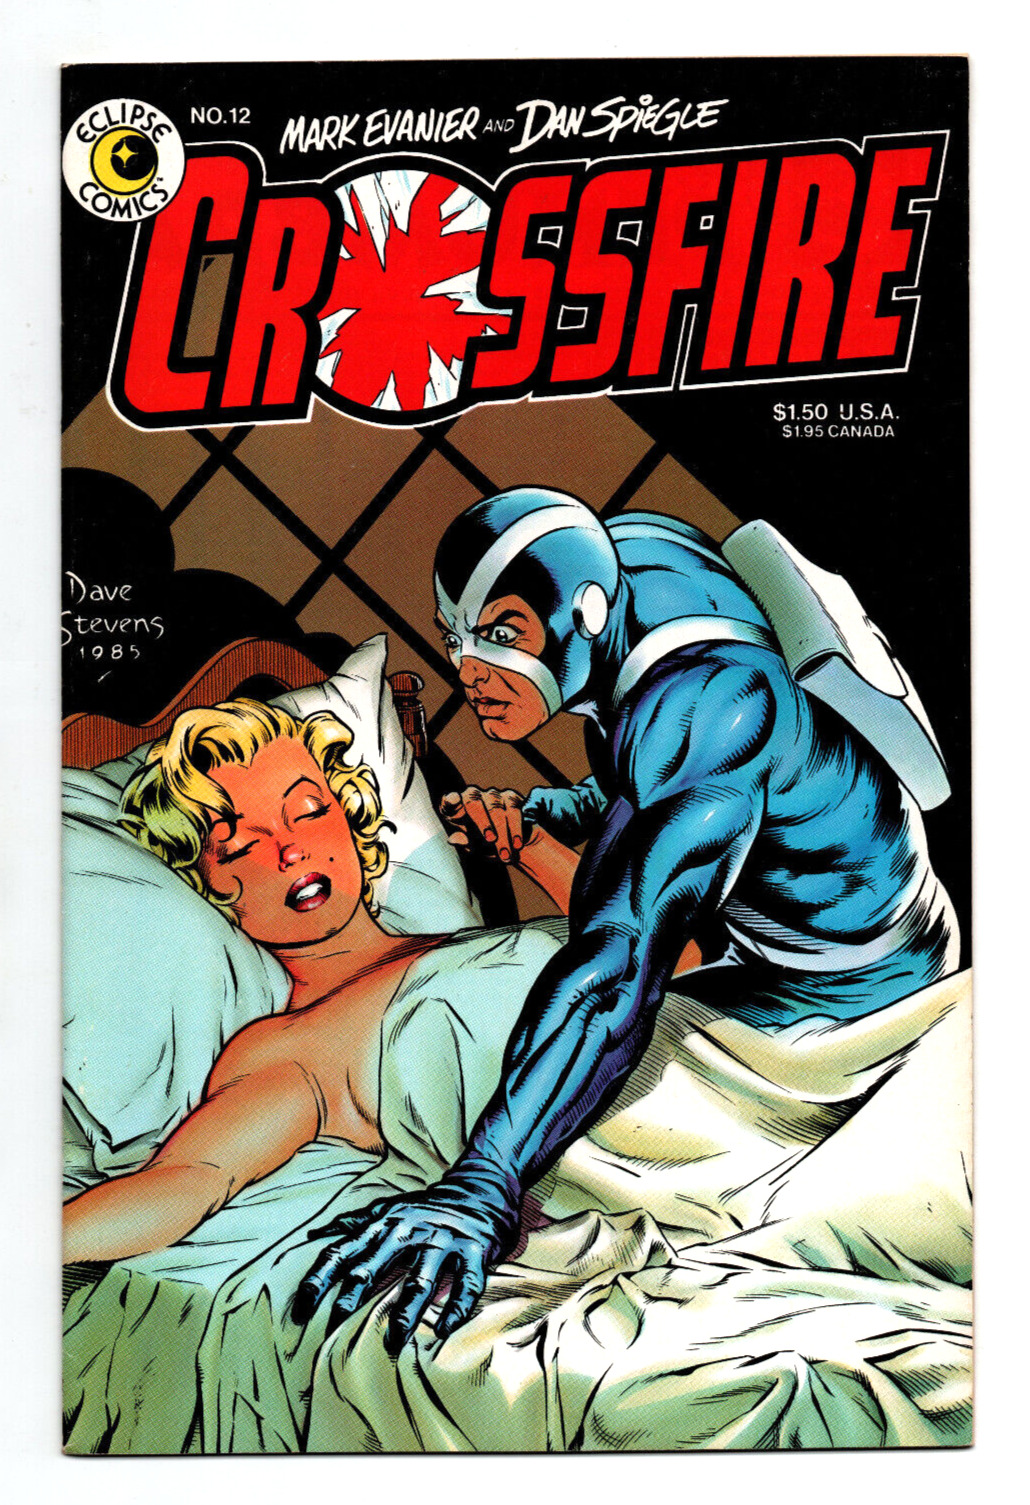 Crossfire #12 - Dave Stevens Cover - Marilyn Monroe - Eclipse Comics - NM